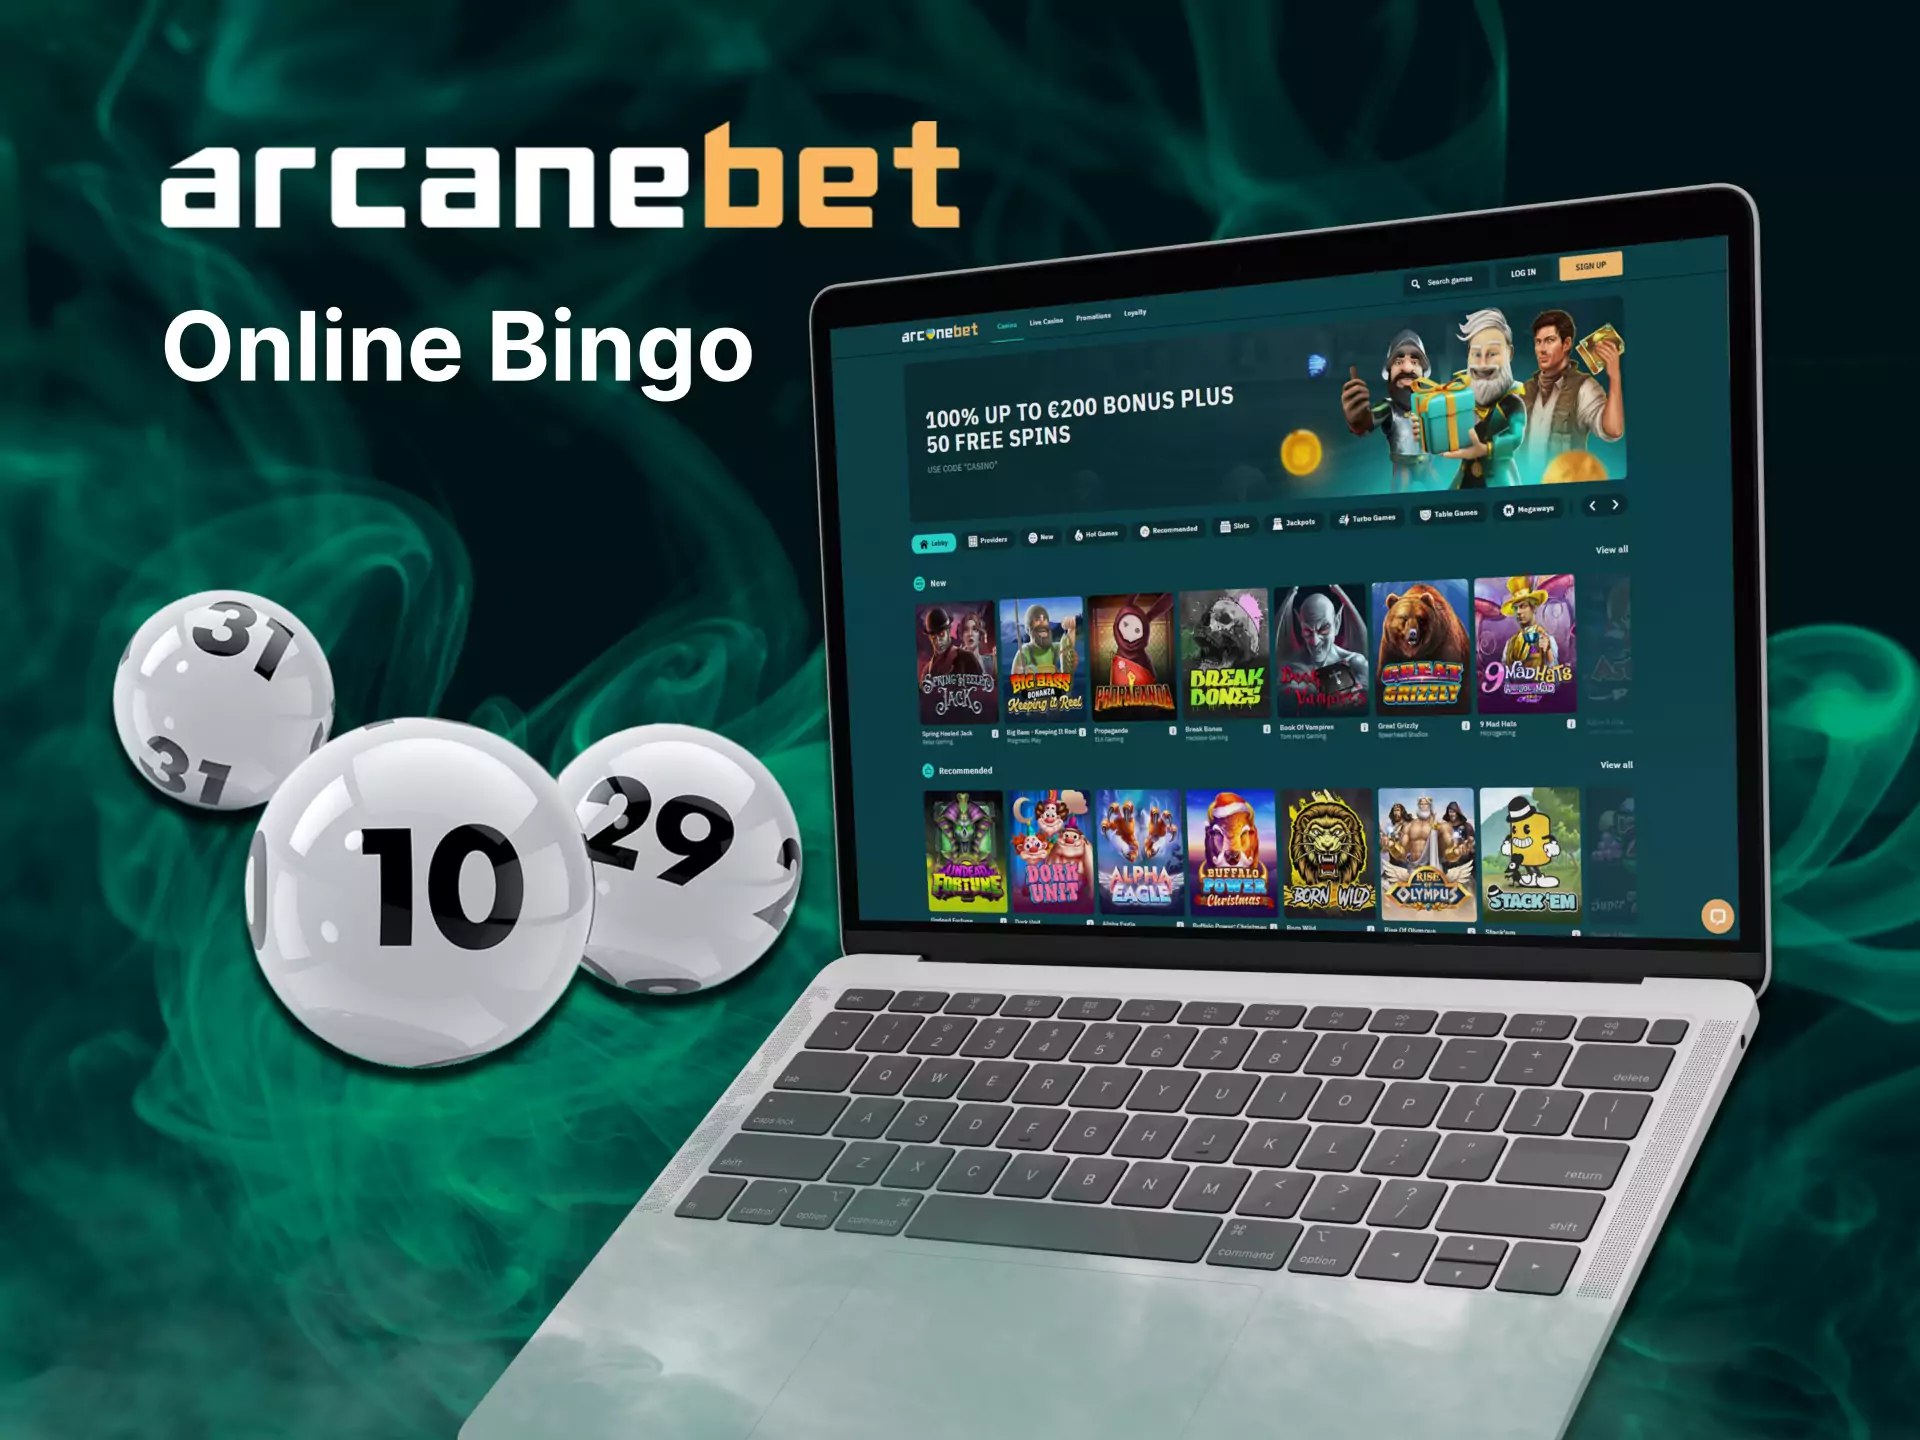 Play online bingo at Arcanebet.